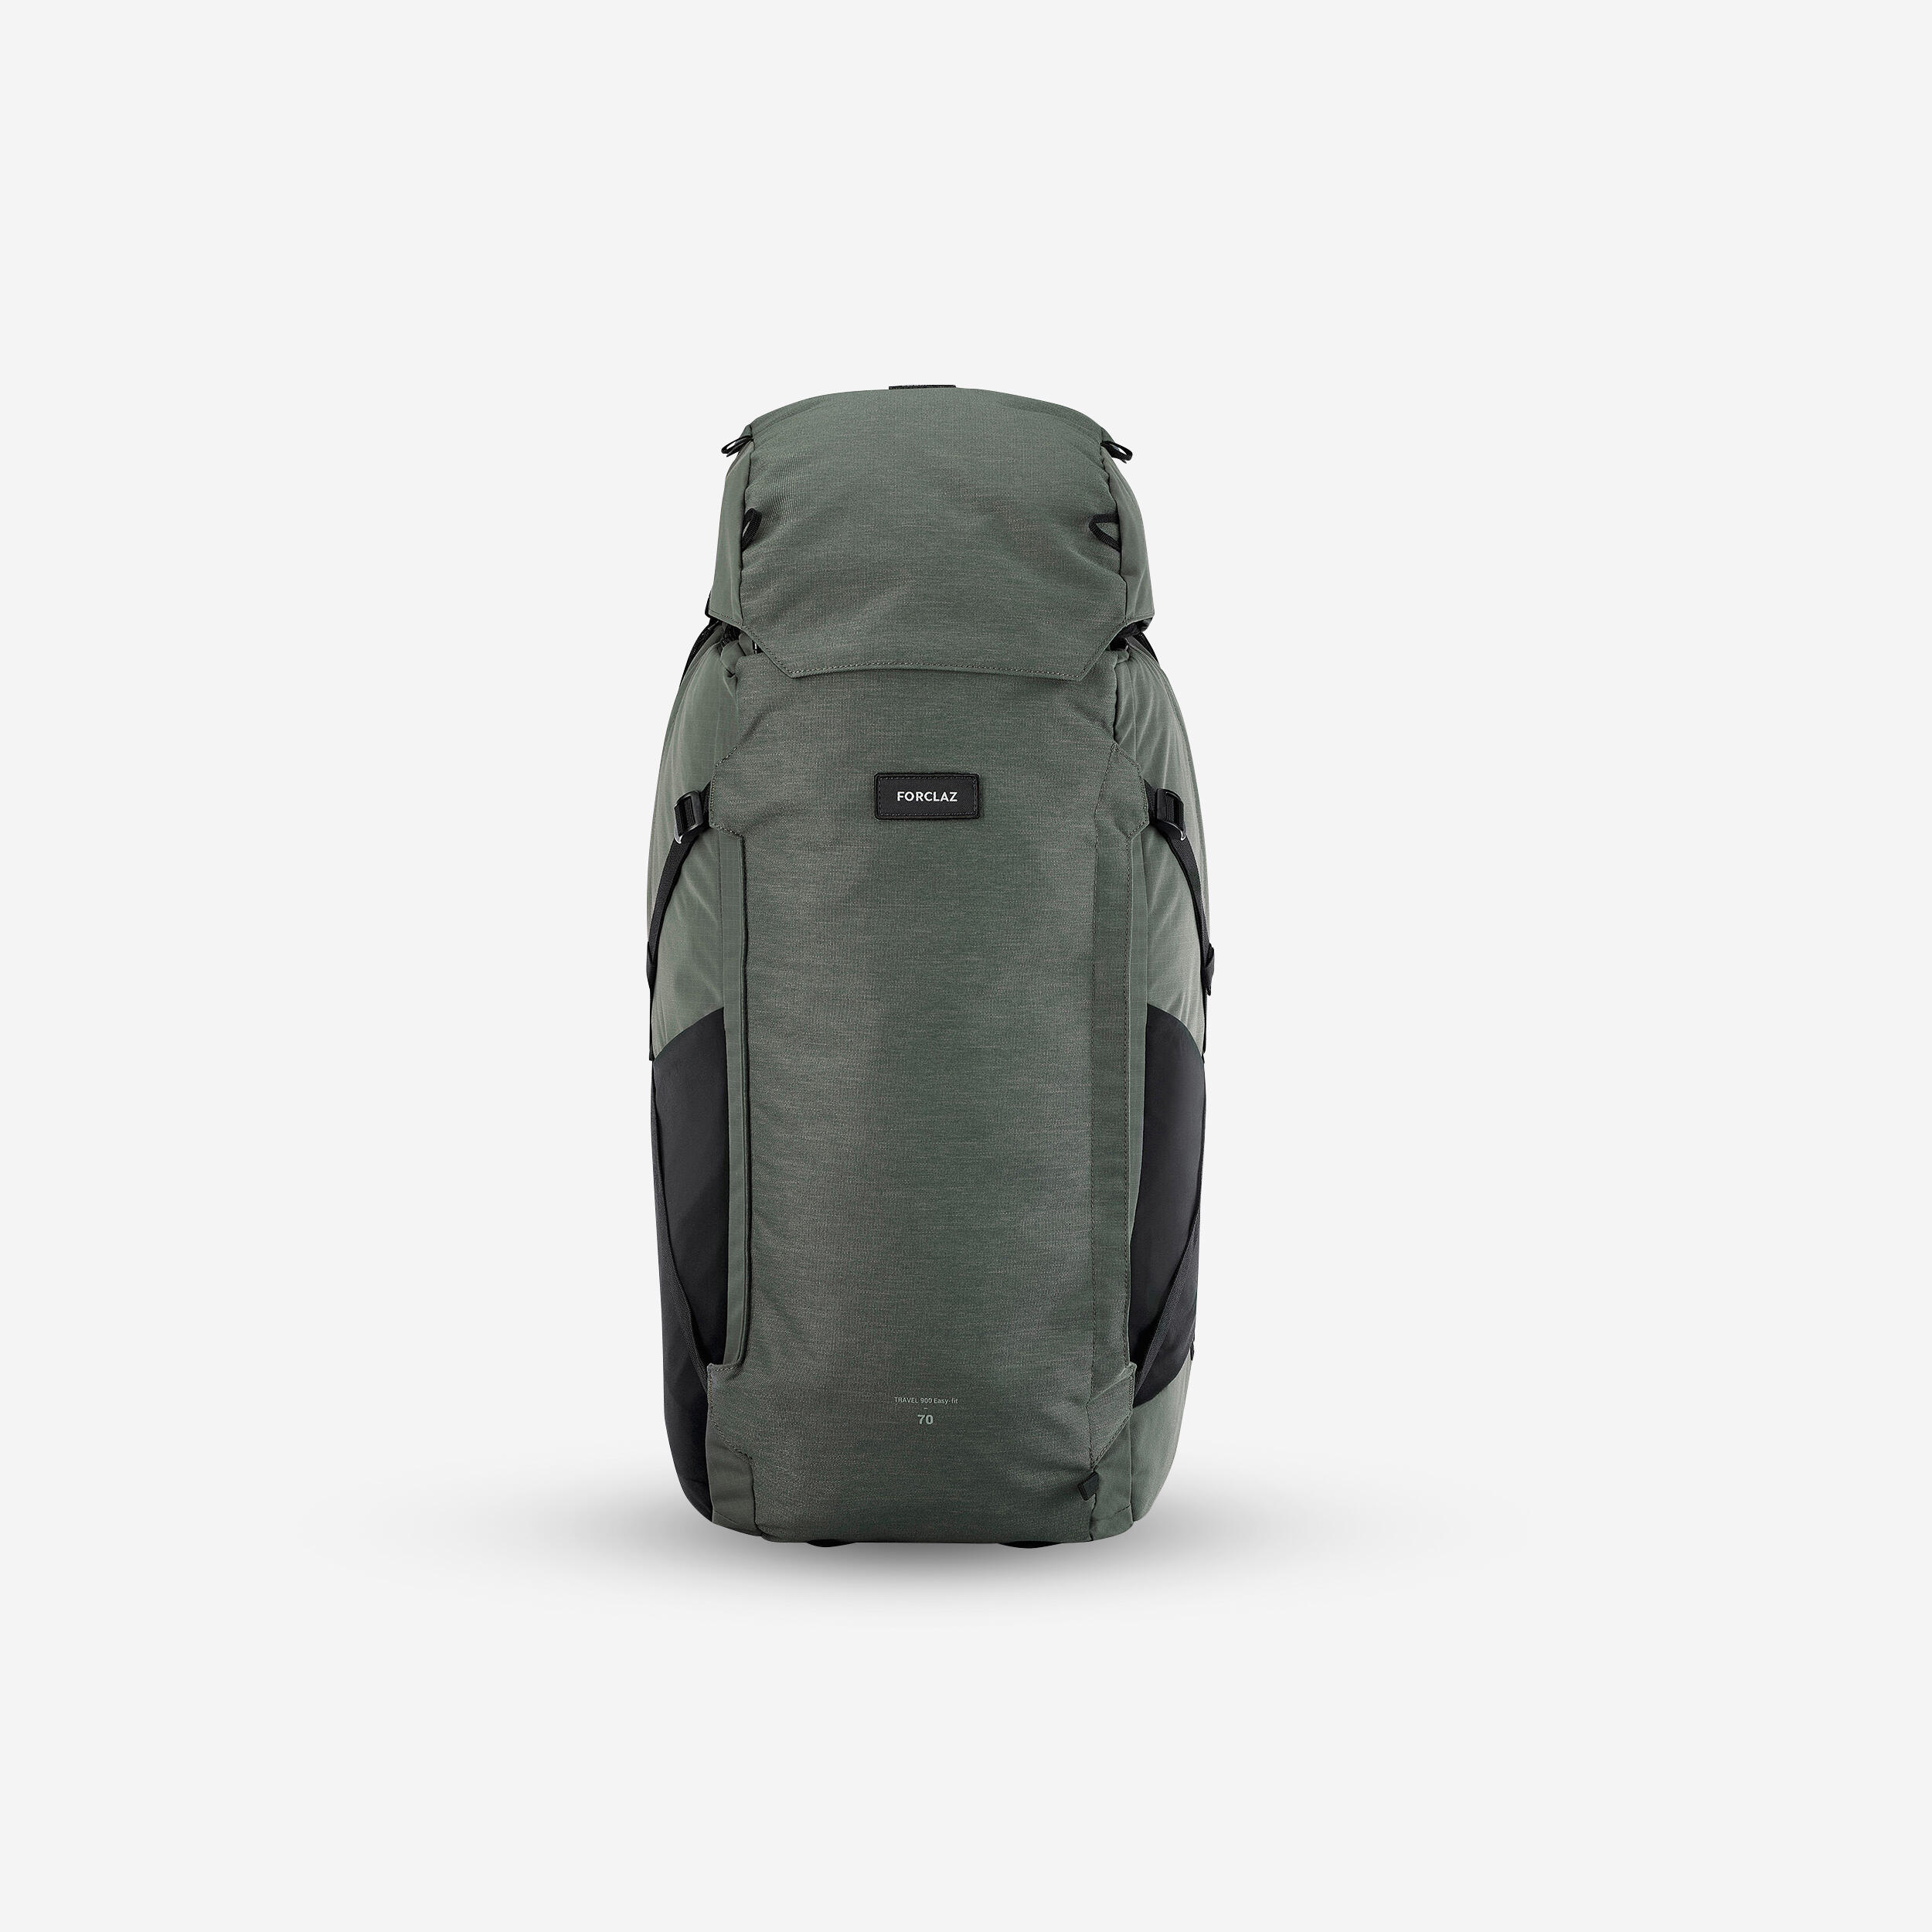 FORCLAZ Women's 50 L + 6 L Hiking Backpack - Travel 900